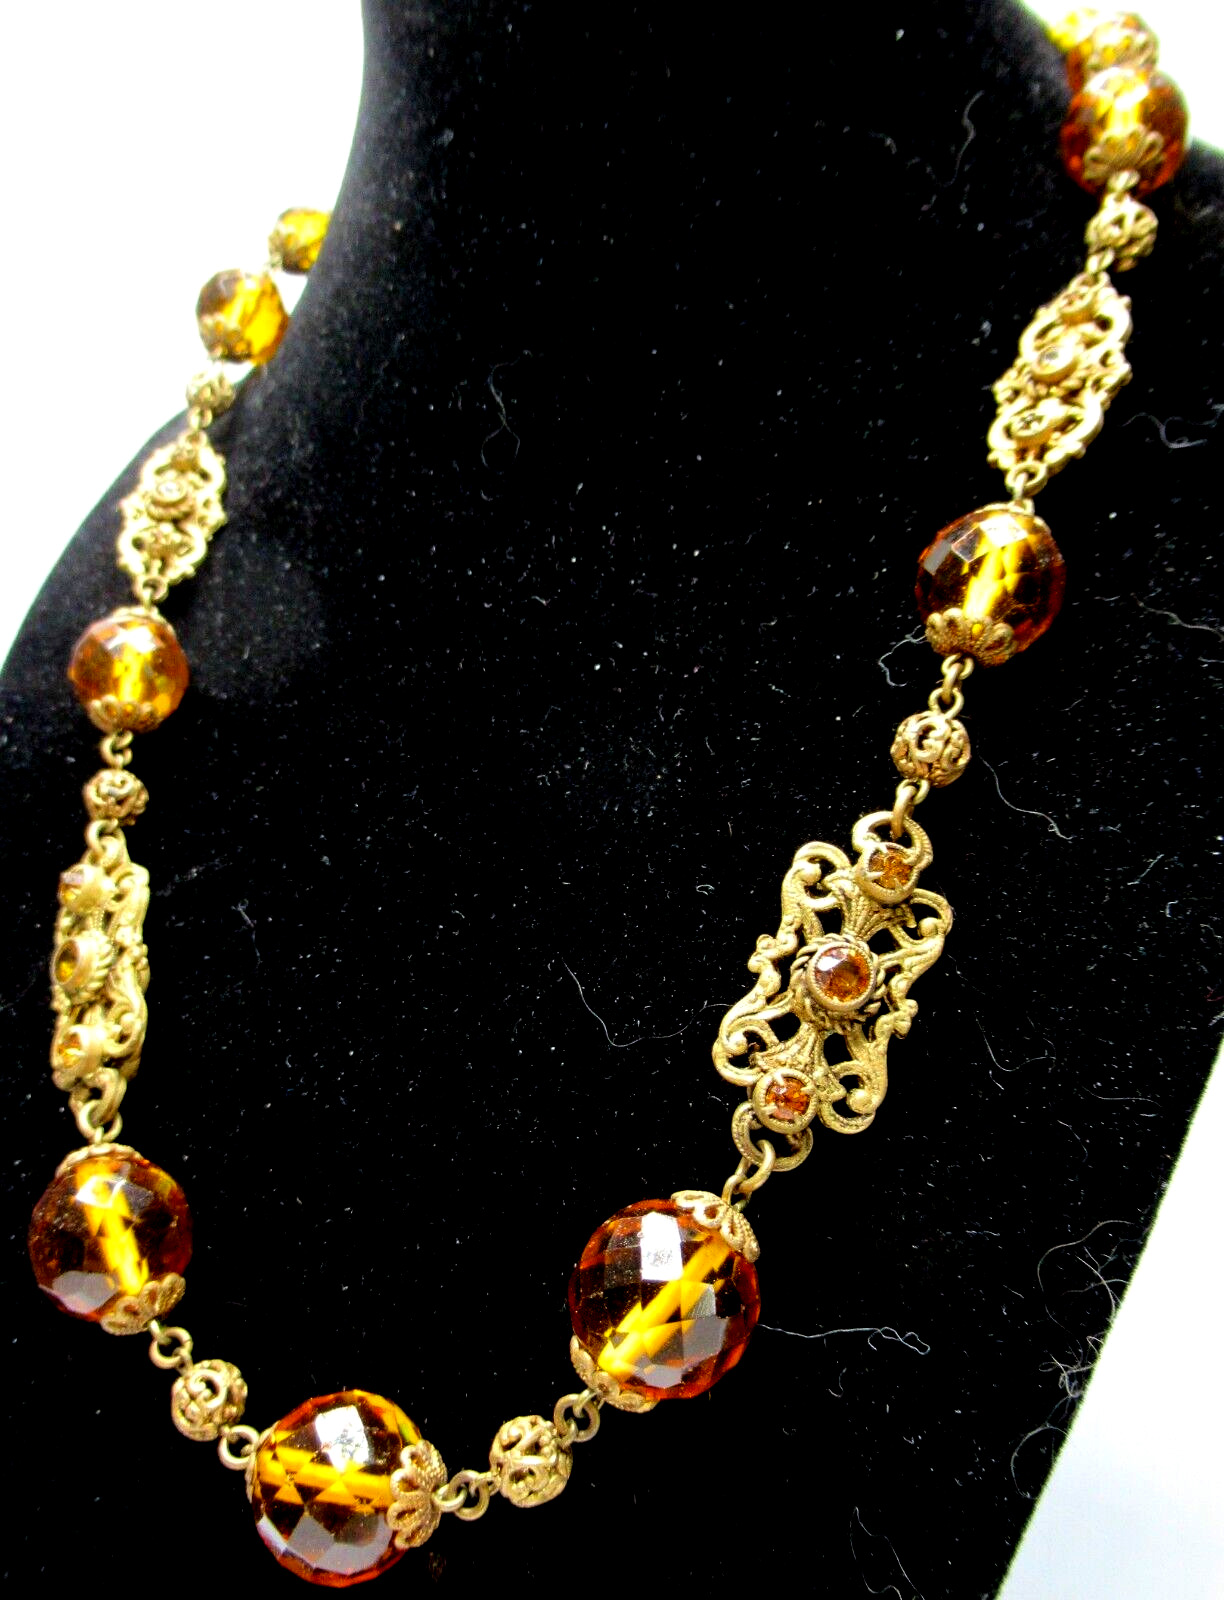 Stunning Antique Czech Amber Glass Crystal Bead & Rhinestone Necklace